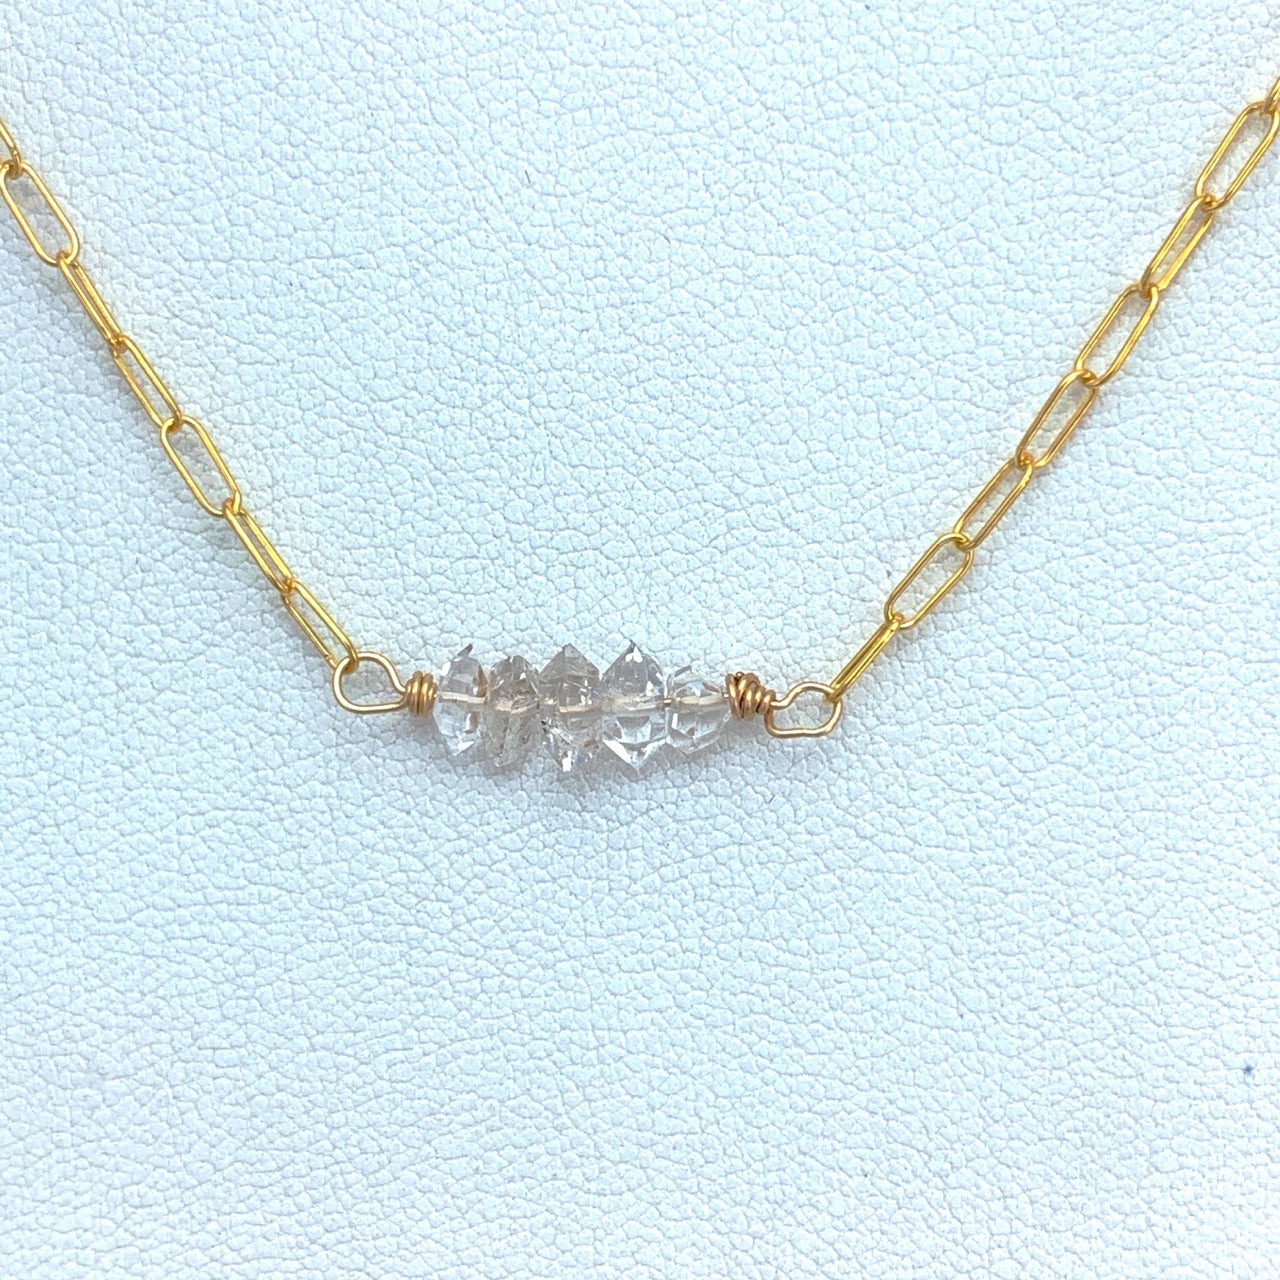 Herkimer Diamonds & Neon Apatite Gembar Necklace